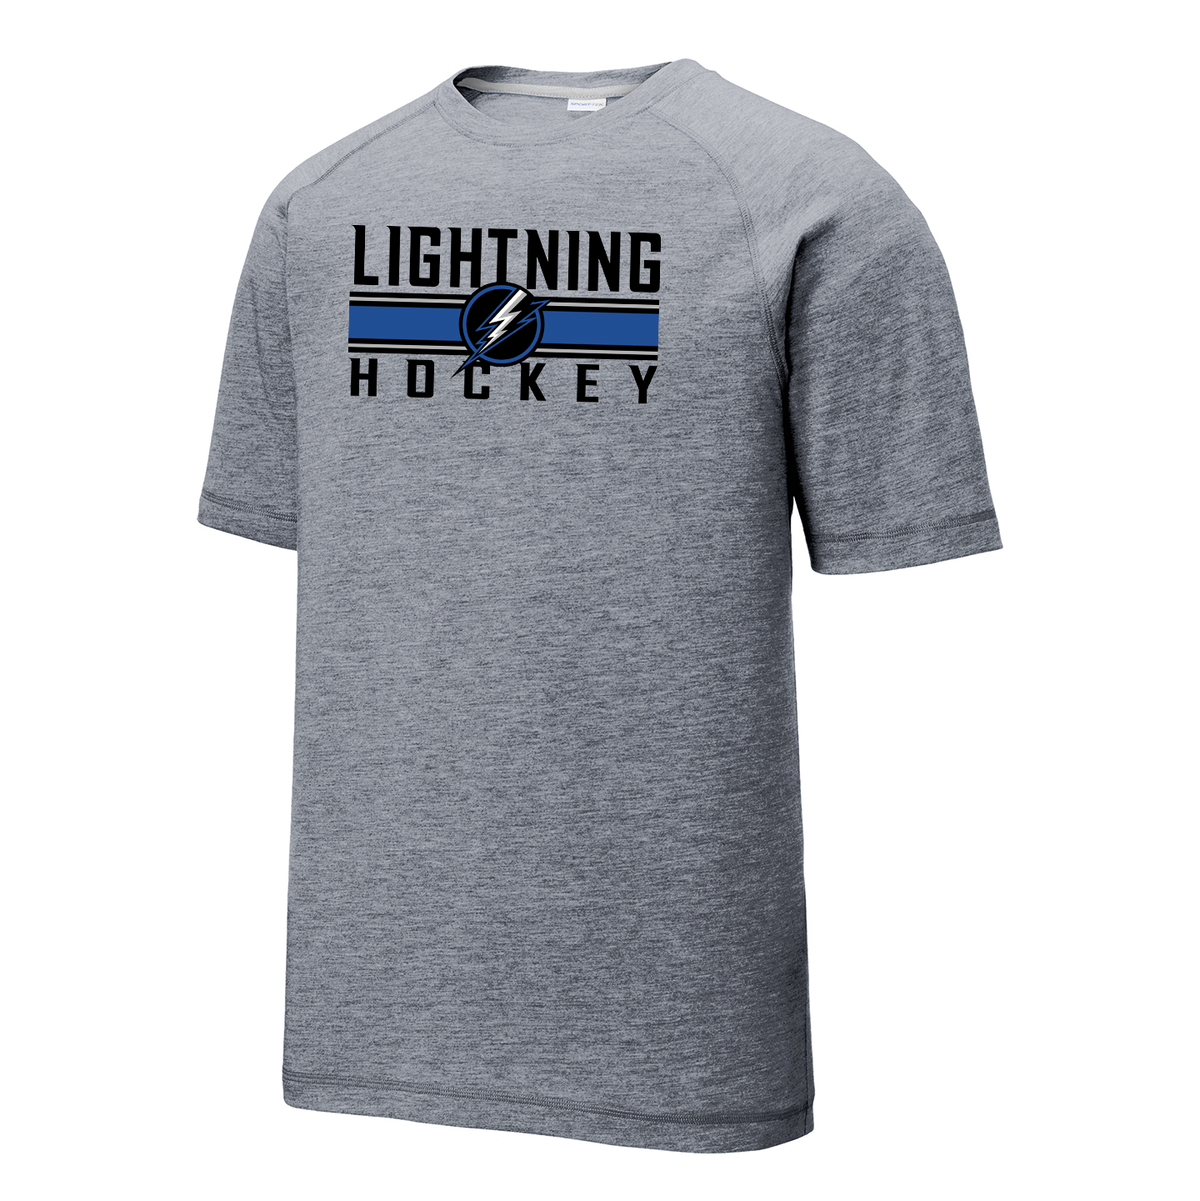 Long Island Lightning Hockey Raglan CottonTouch Tee